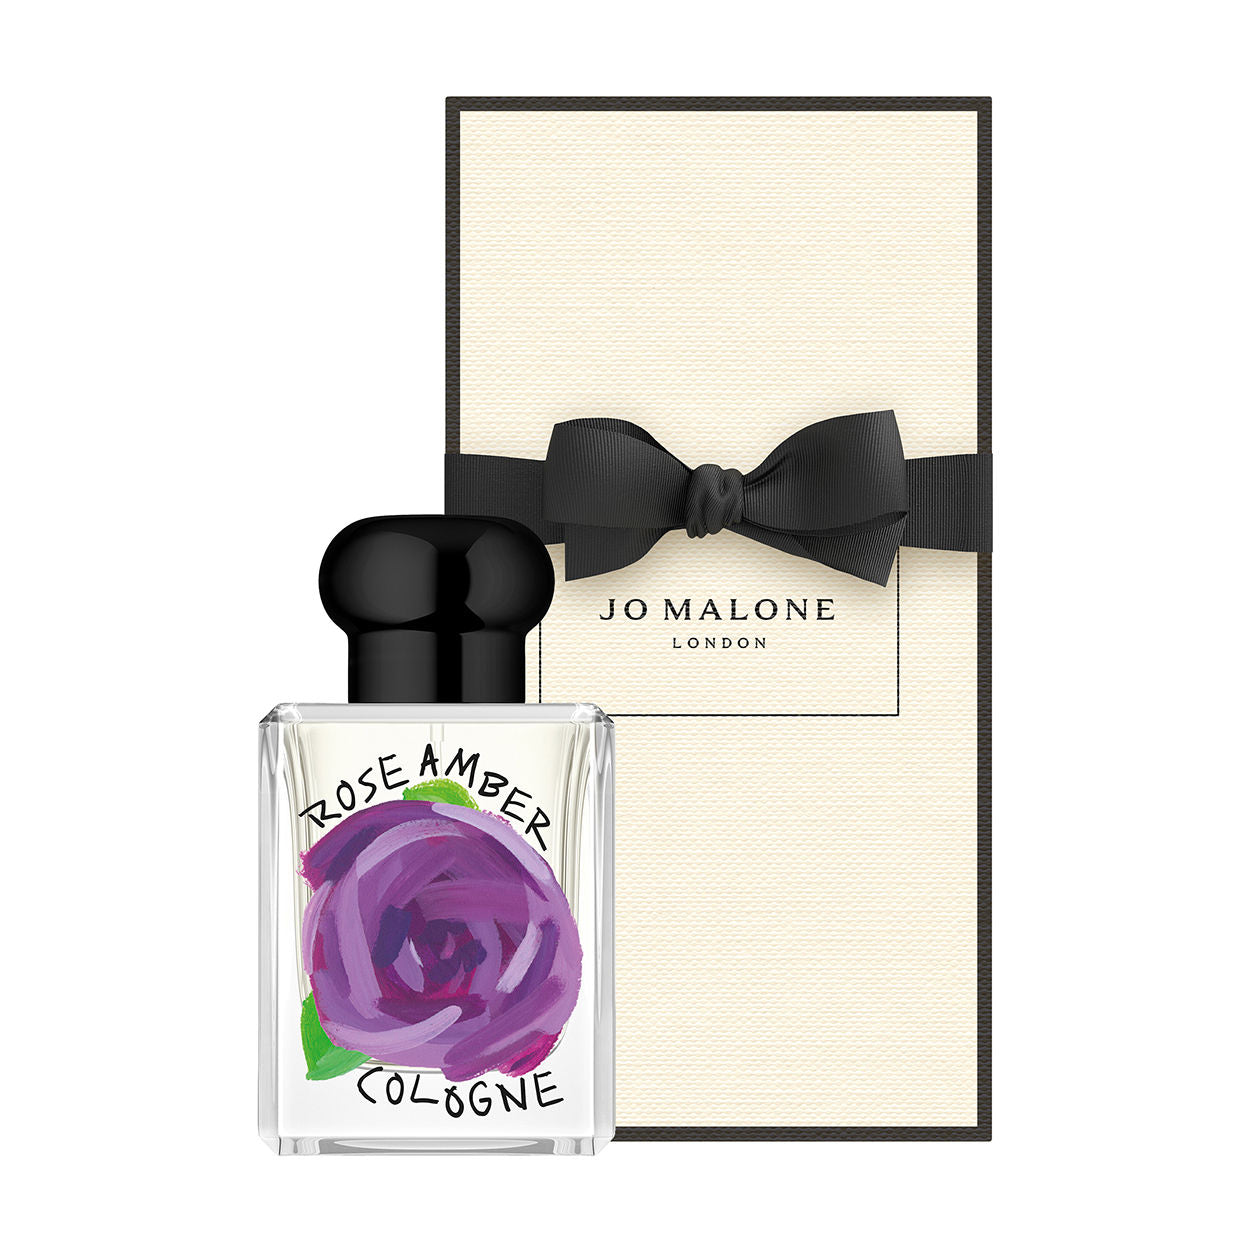 Jo Malone London Rose Amber Cologne (Limited Edition) main image